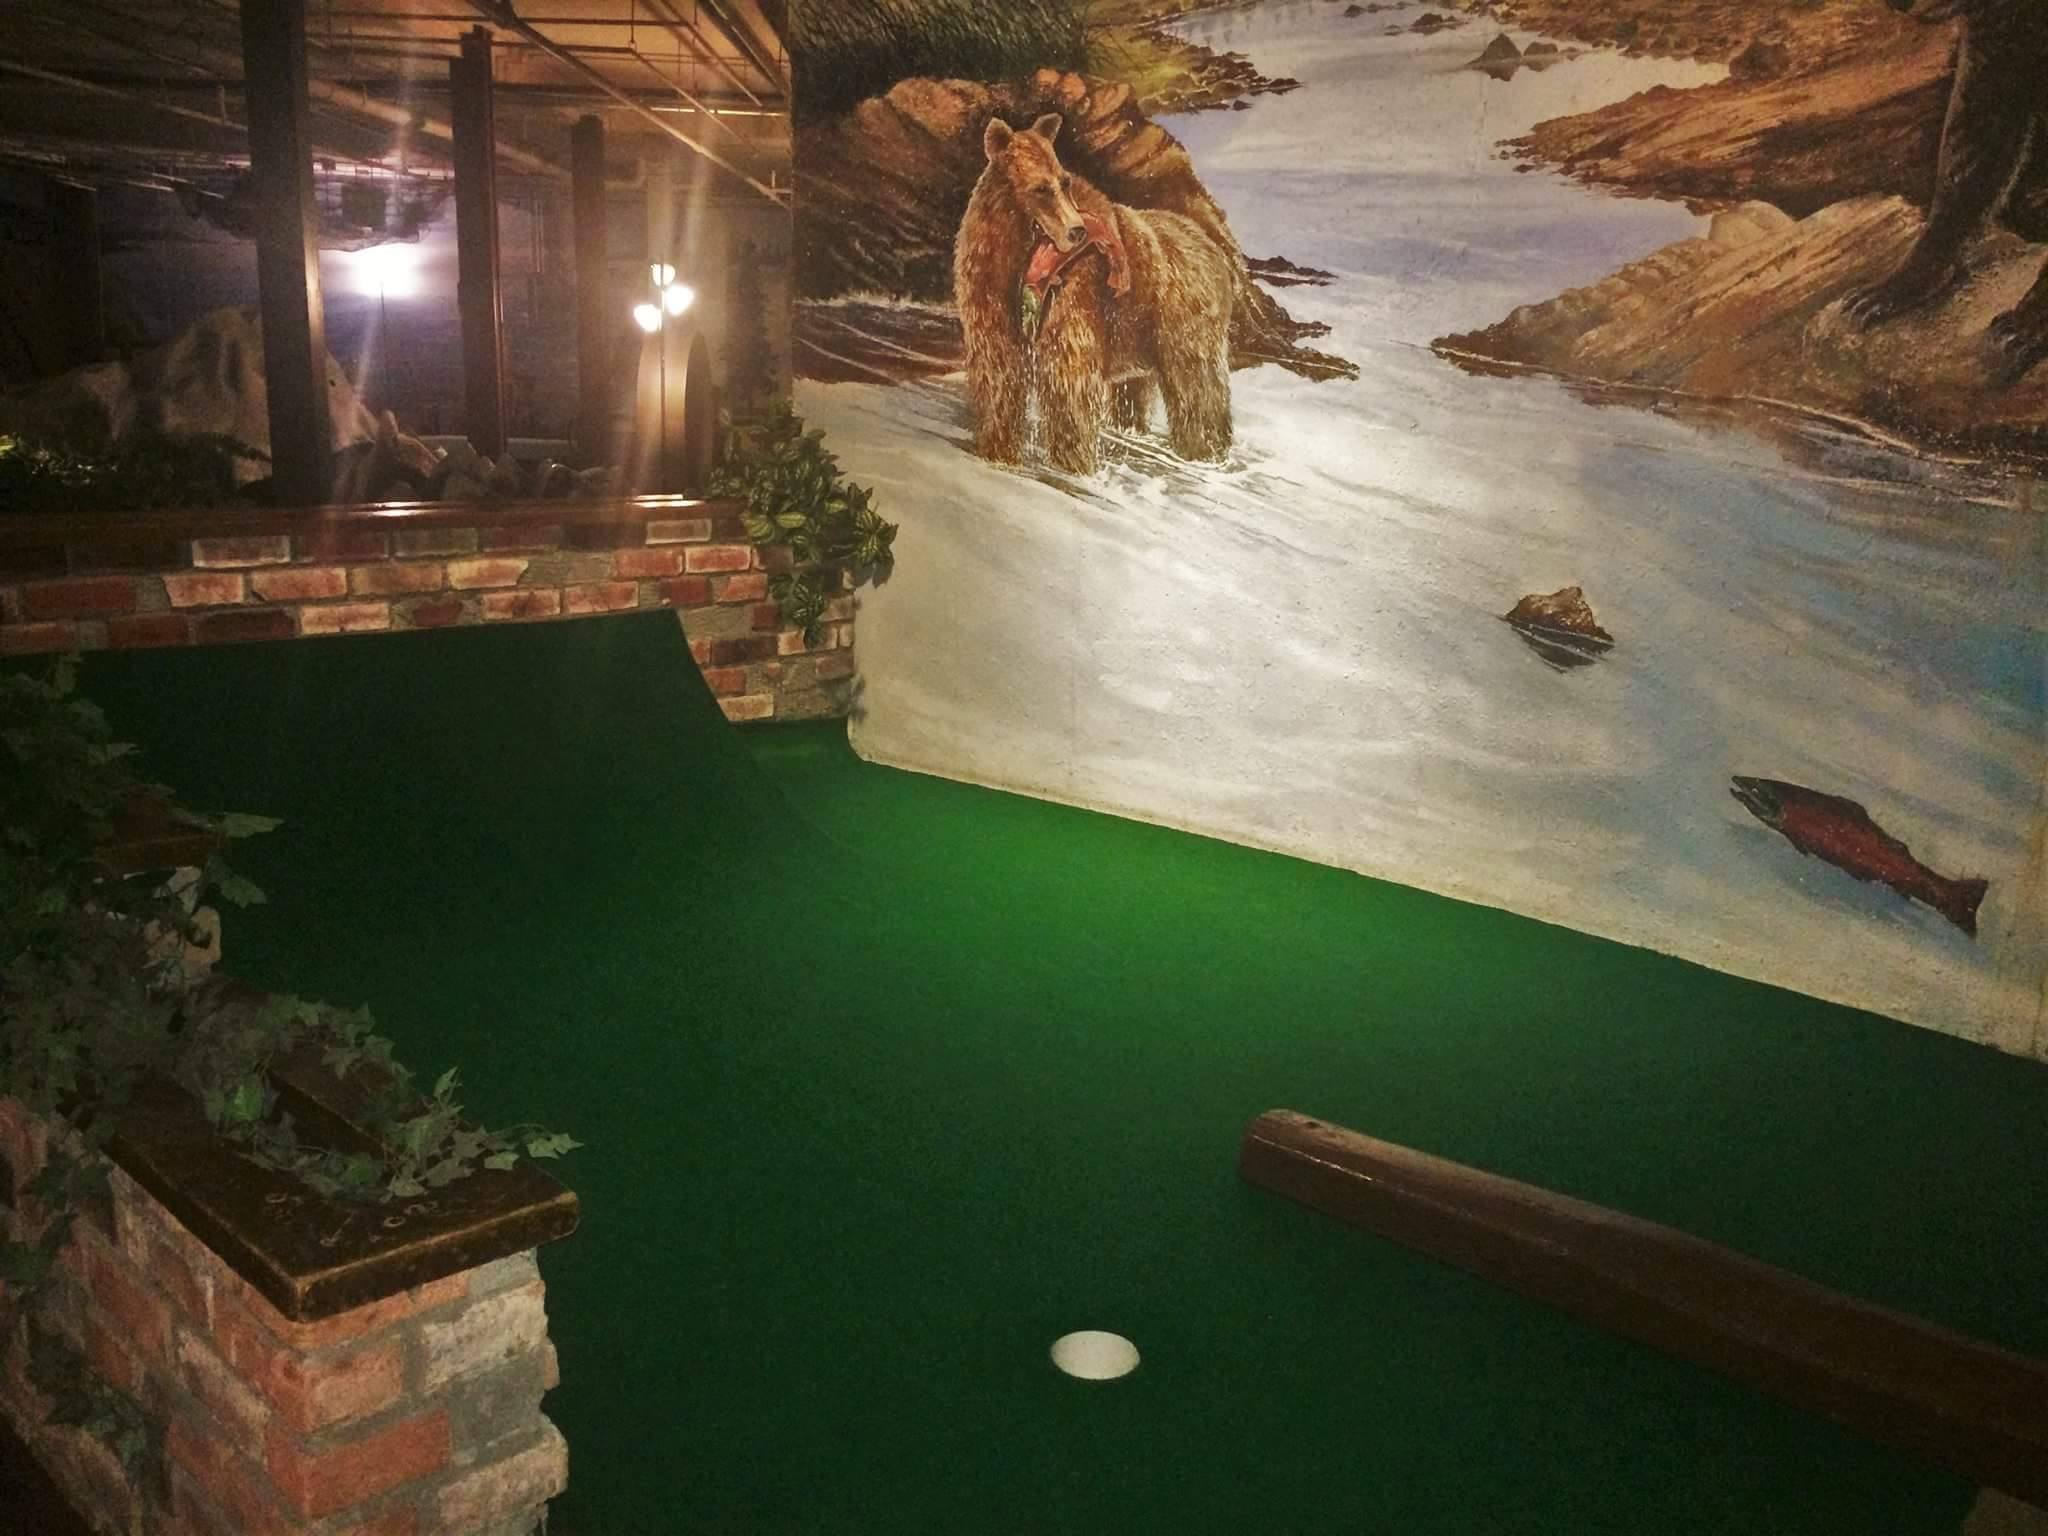 Castle On O'Malley Miniature Golf